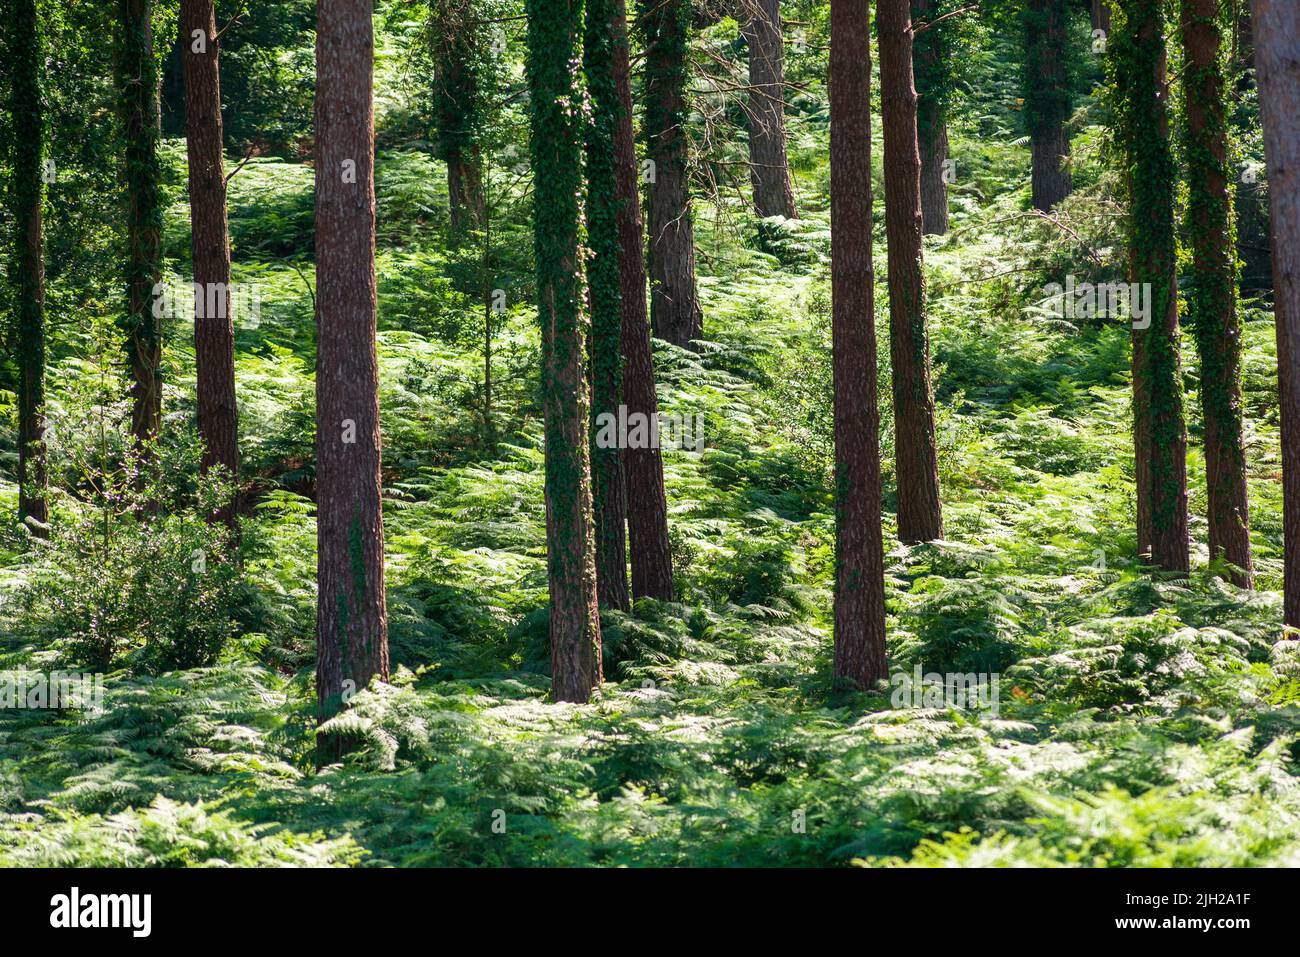 Pine tree woodland in shimmering green bracken Stock Photo